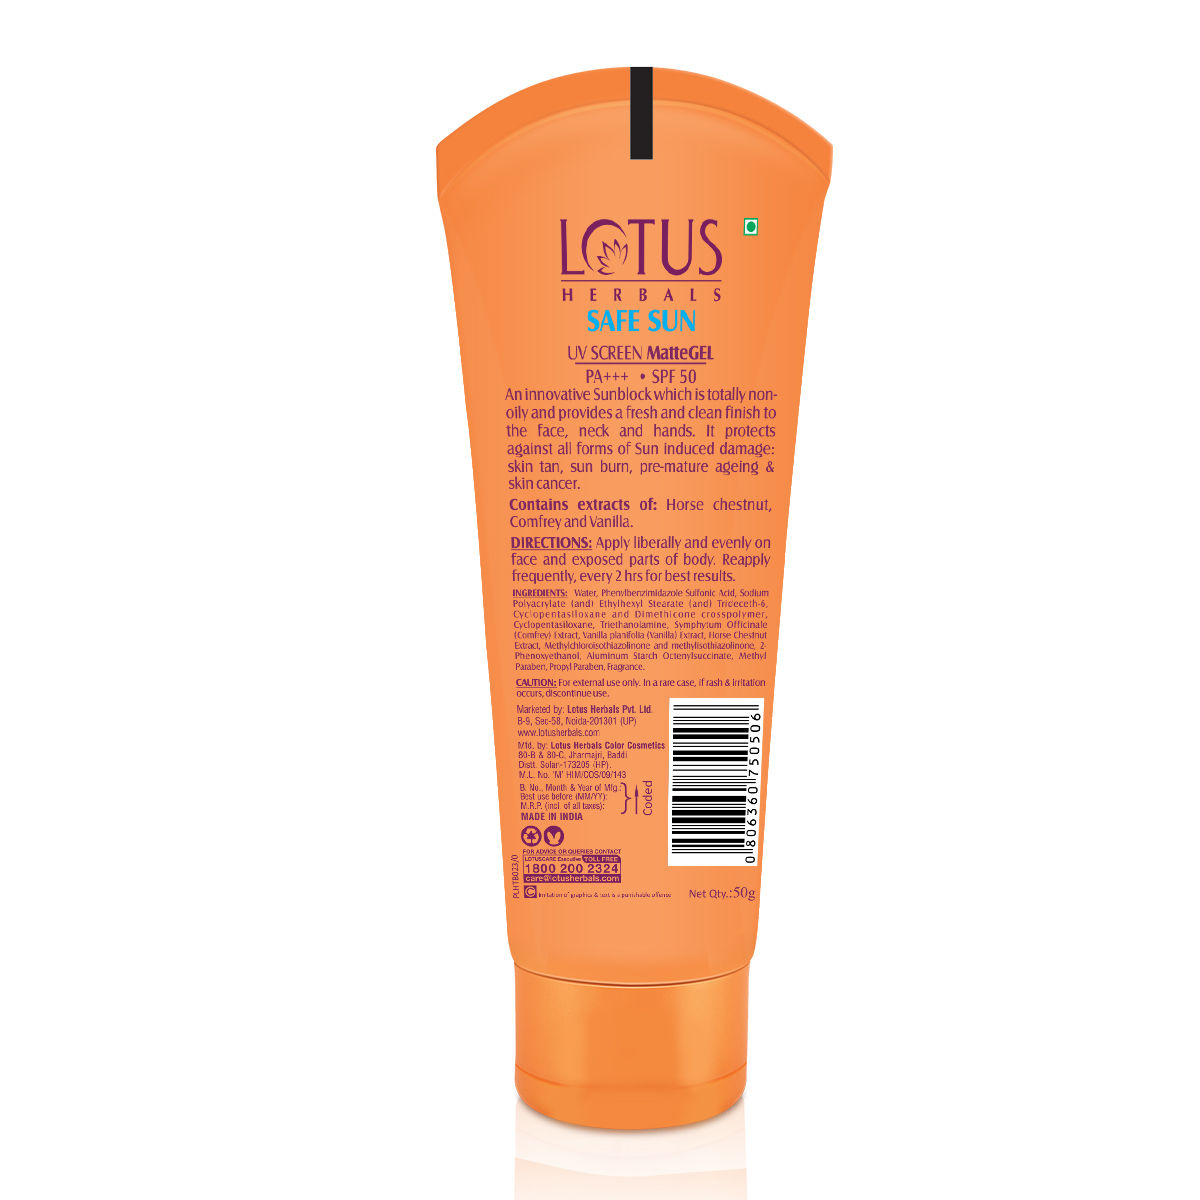 Lotus Herbals Safe Sun UV Screen Matte Gel SPF 50 PA+++, 50 gm, Pack of 1 